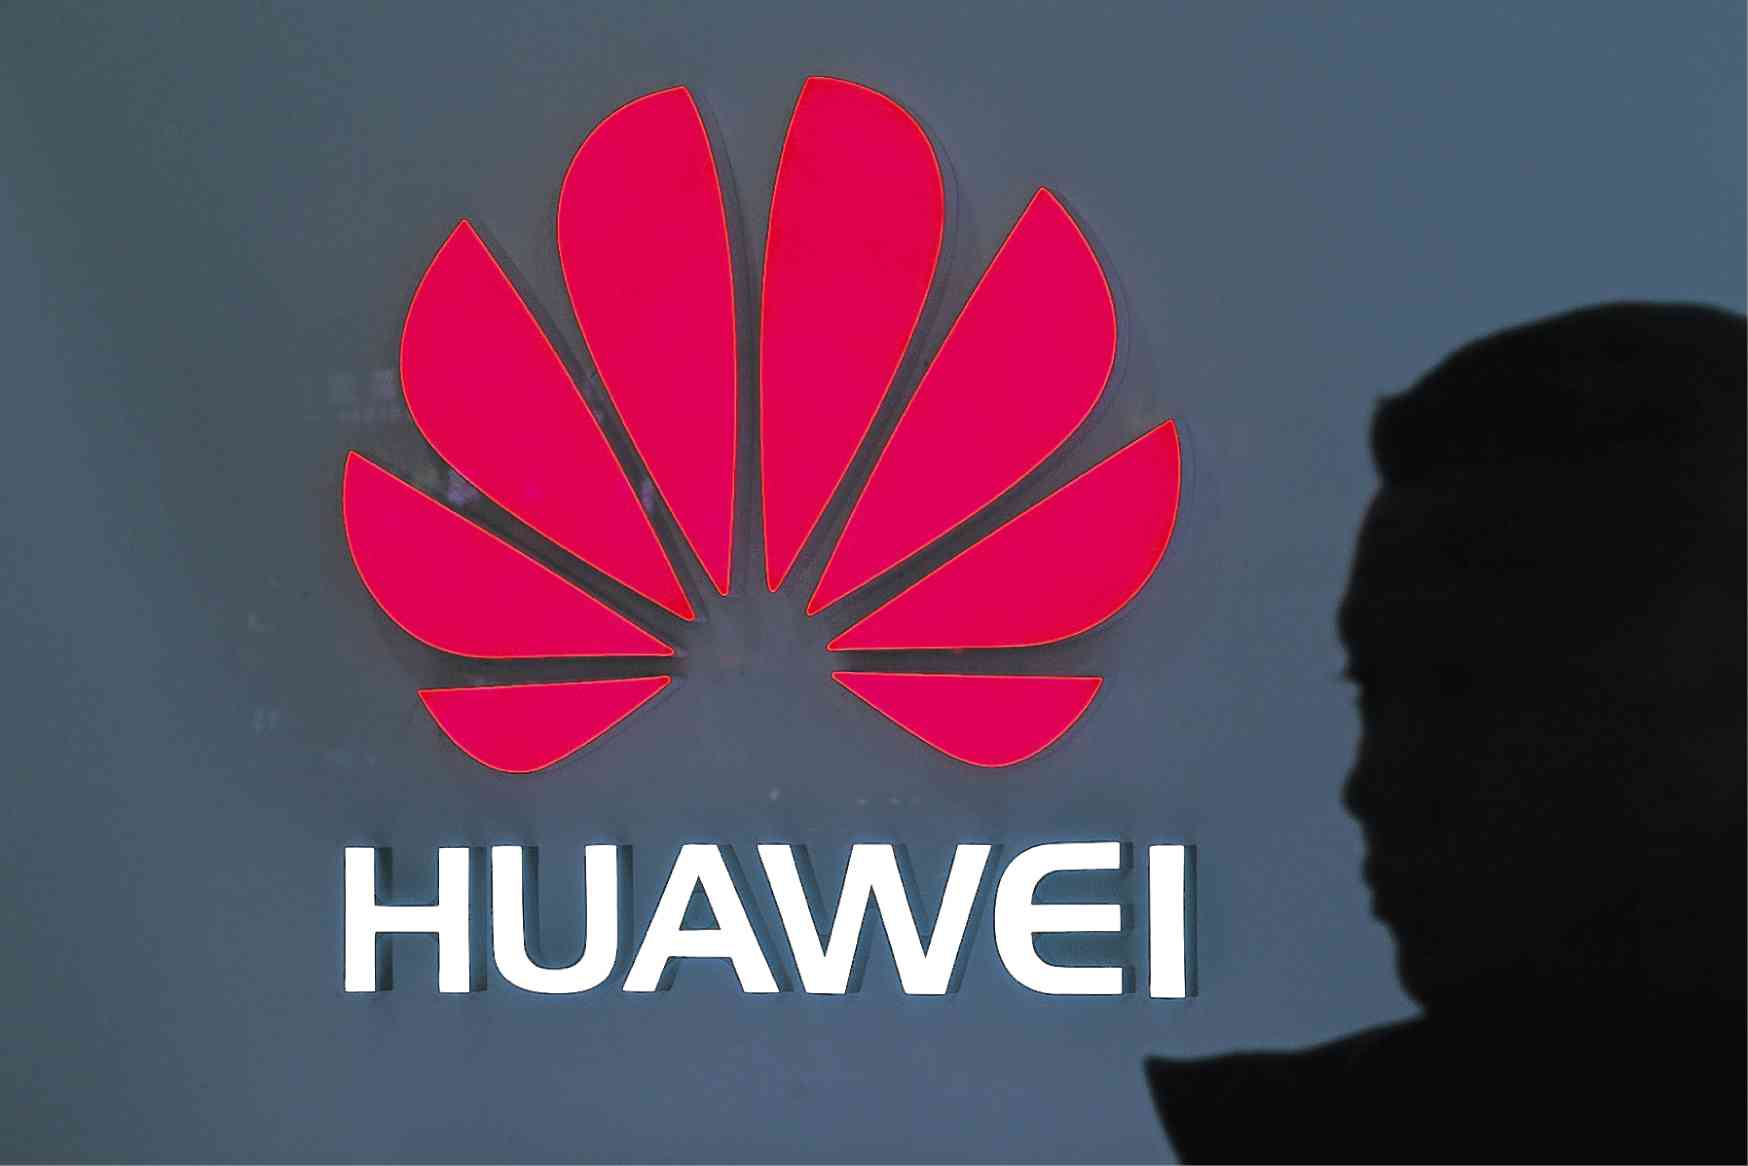 Huawei facing criminal probe over theft of trade secrets – report